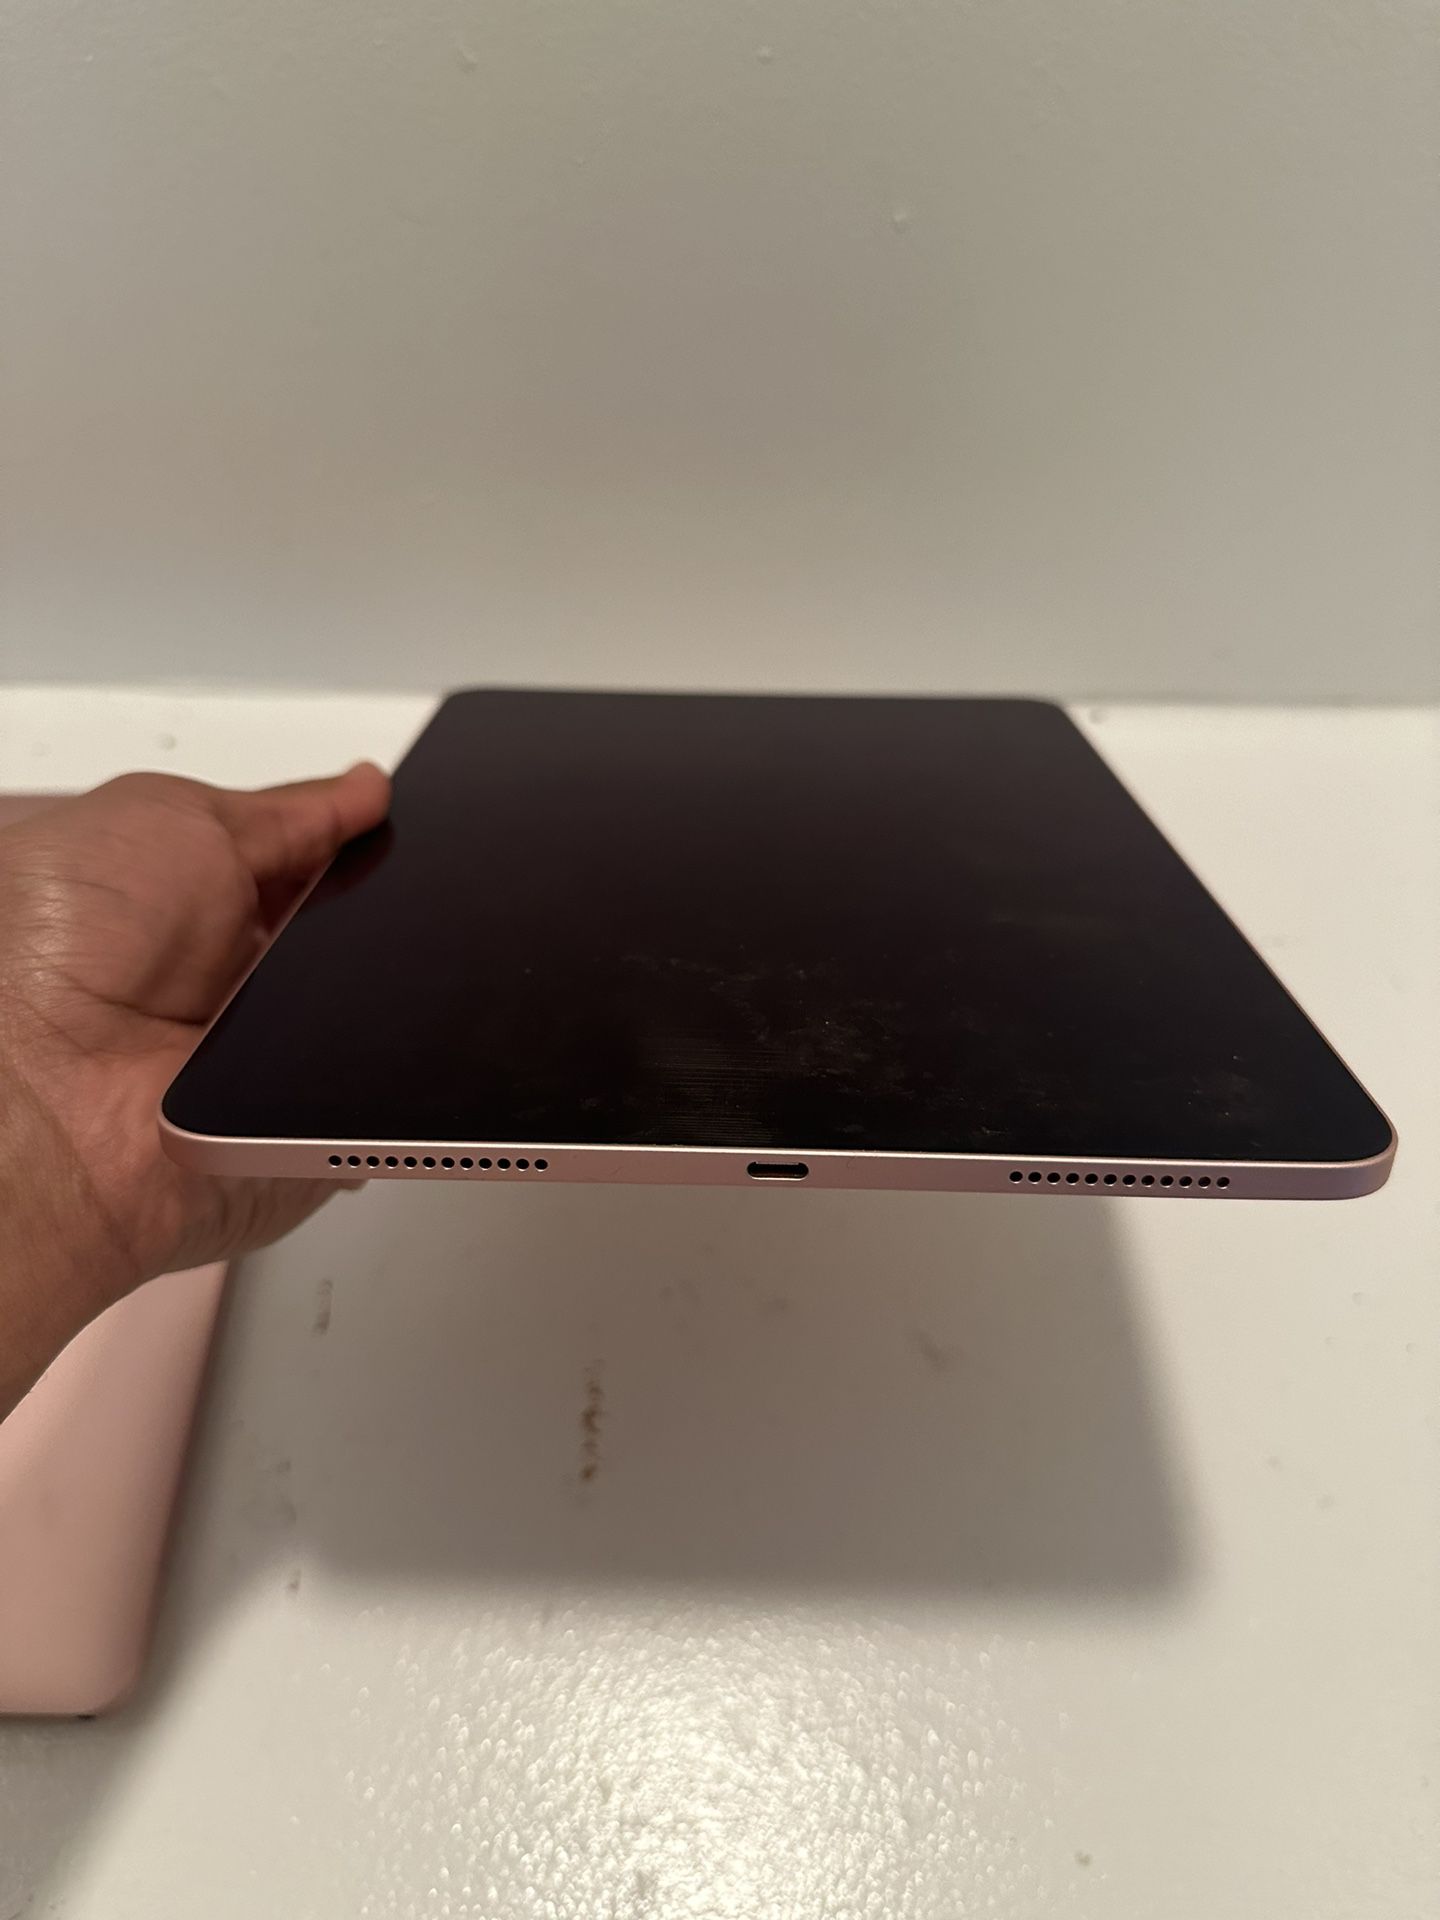 iPad Air 4th Generation Pink Locked 